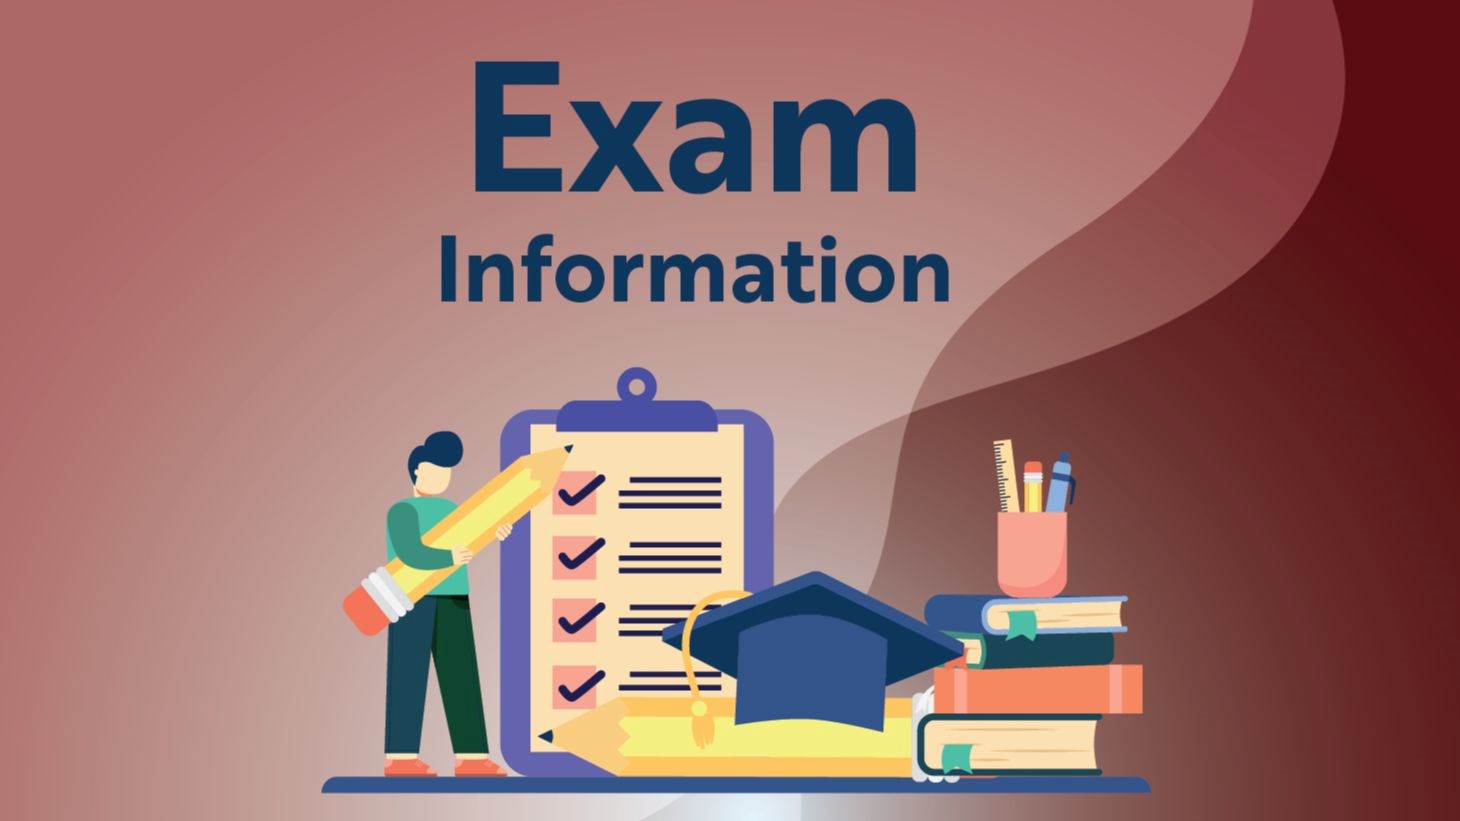 Exam Information